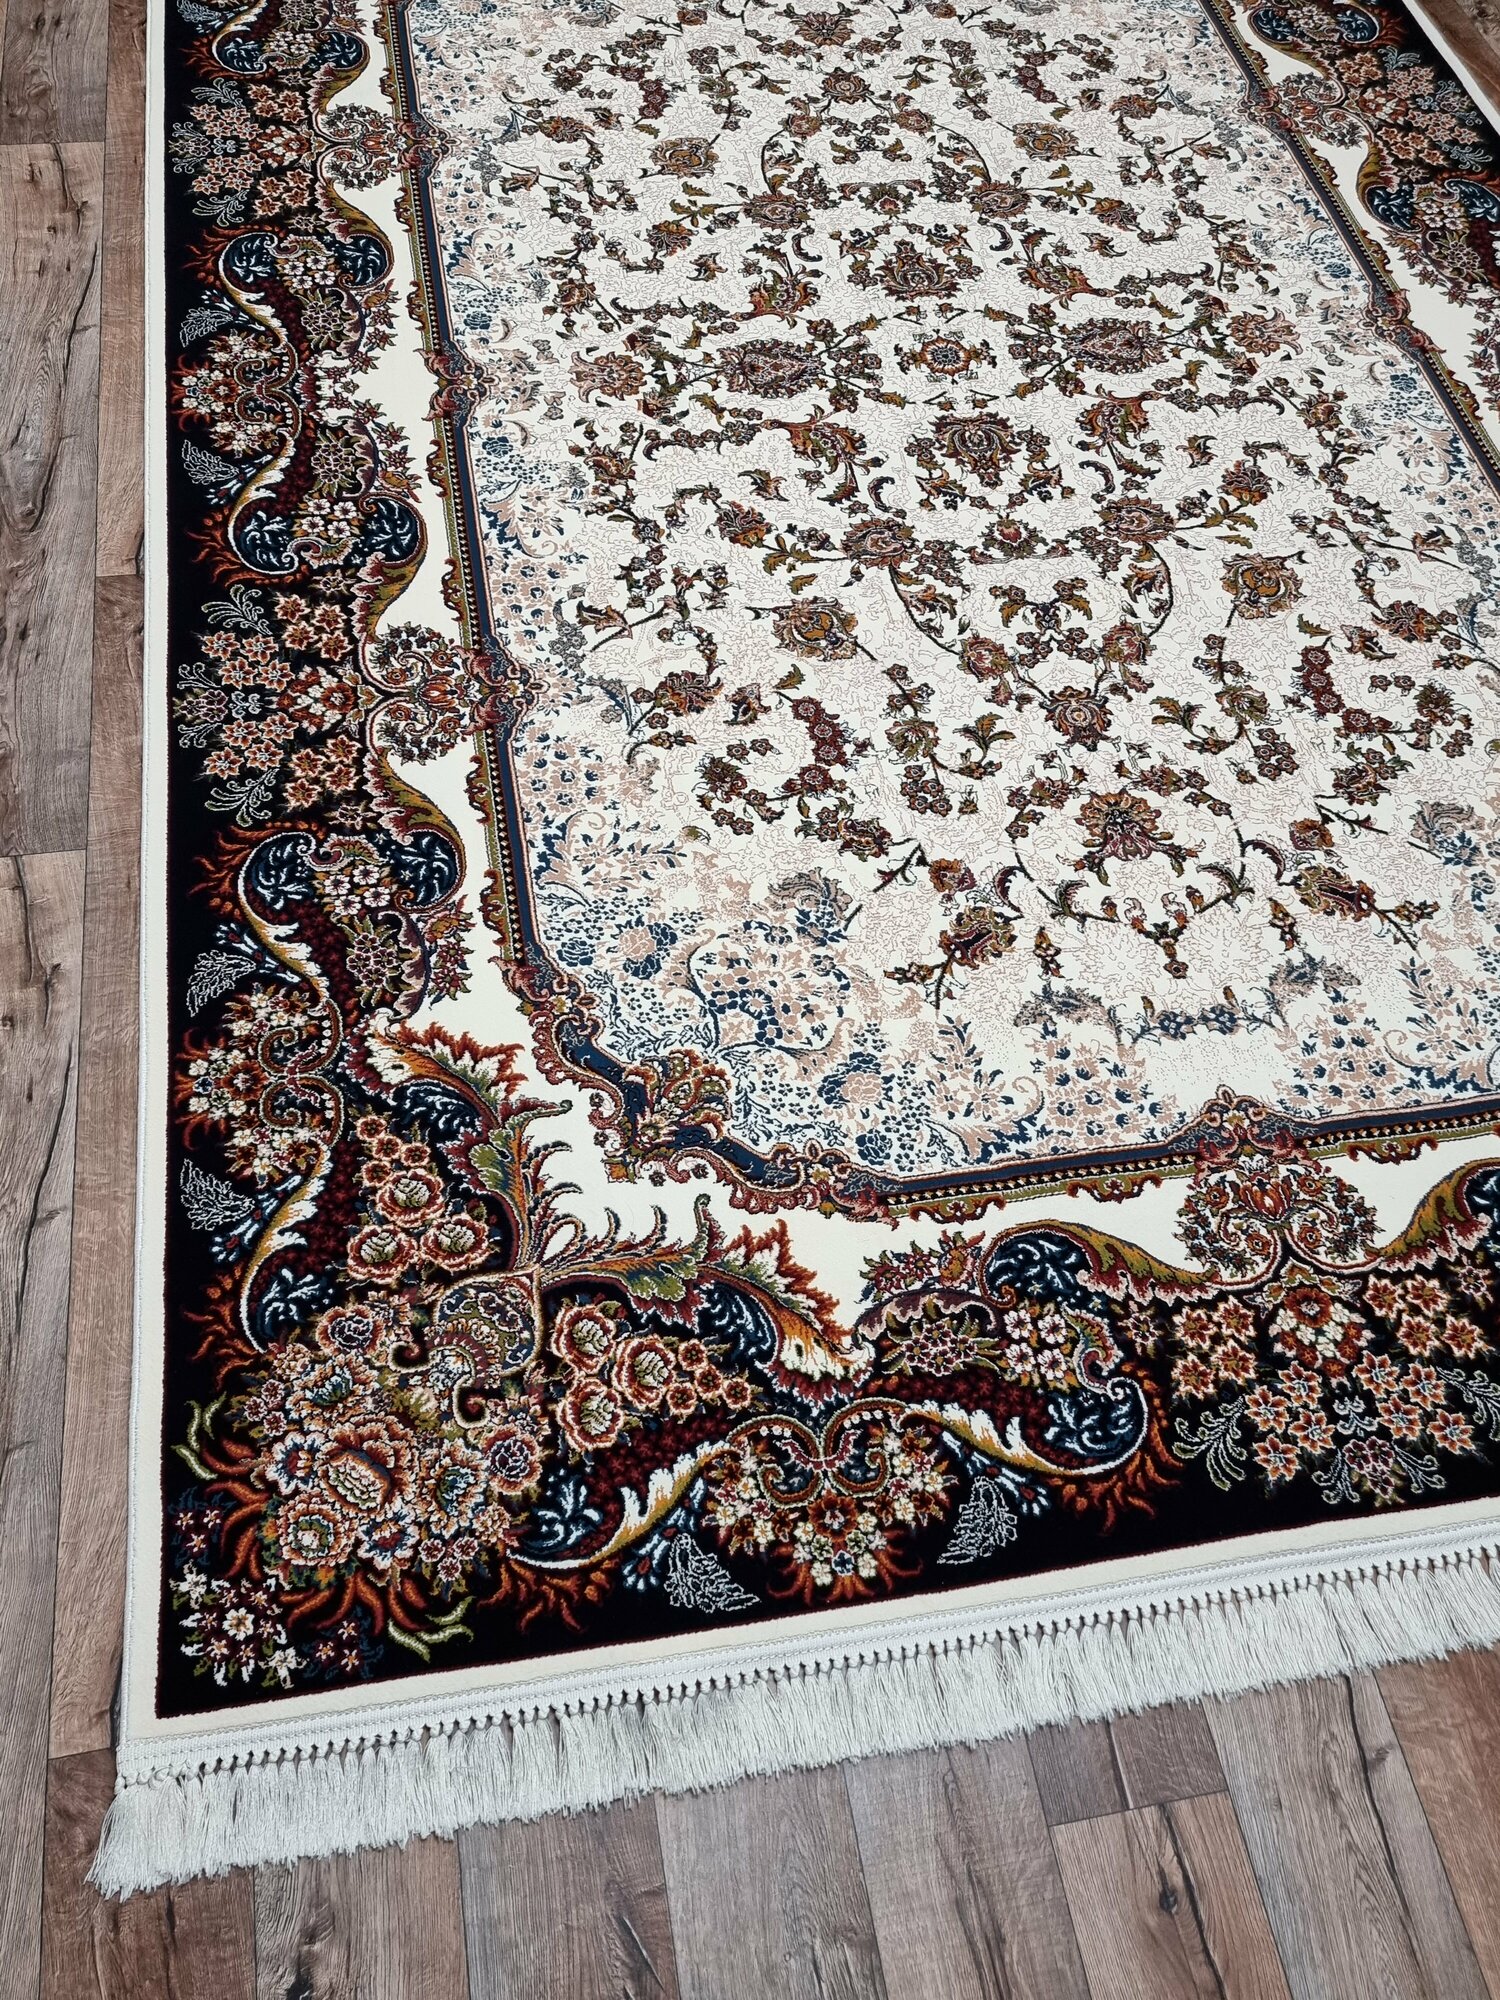 Персидский ковер Farrahi Carpet, Иран, размер 2х3 м